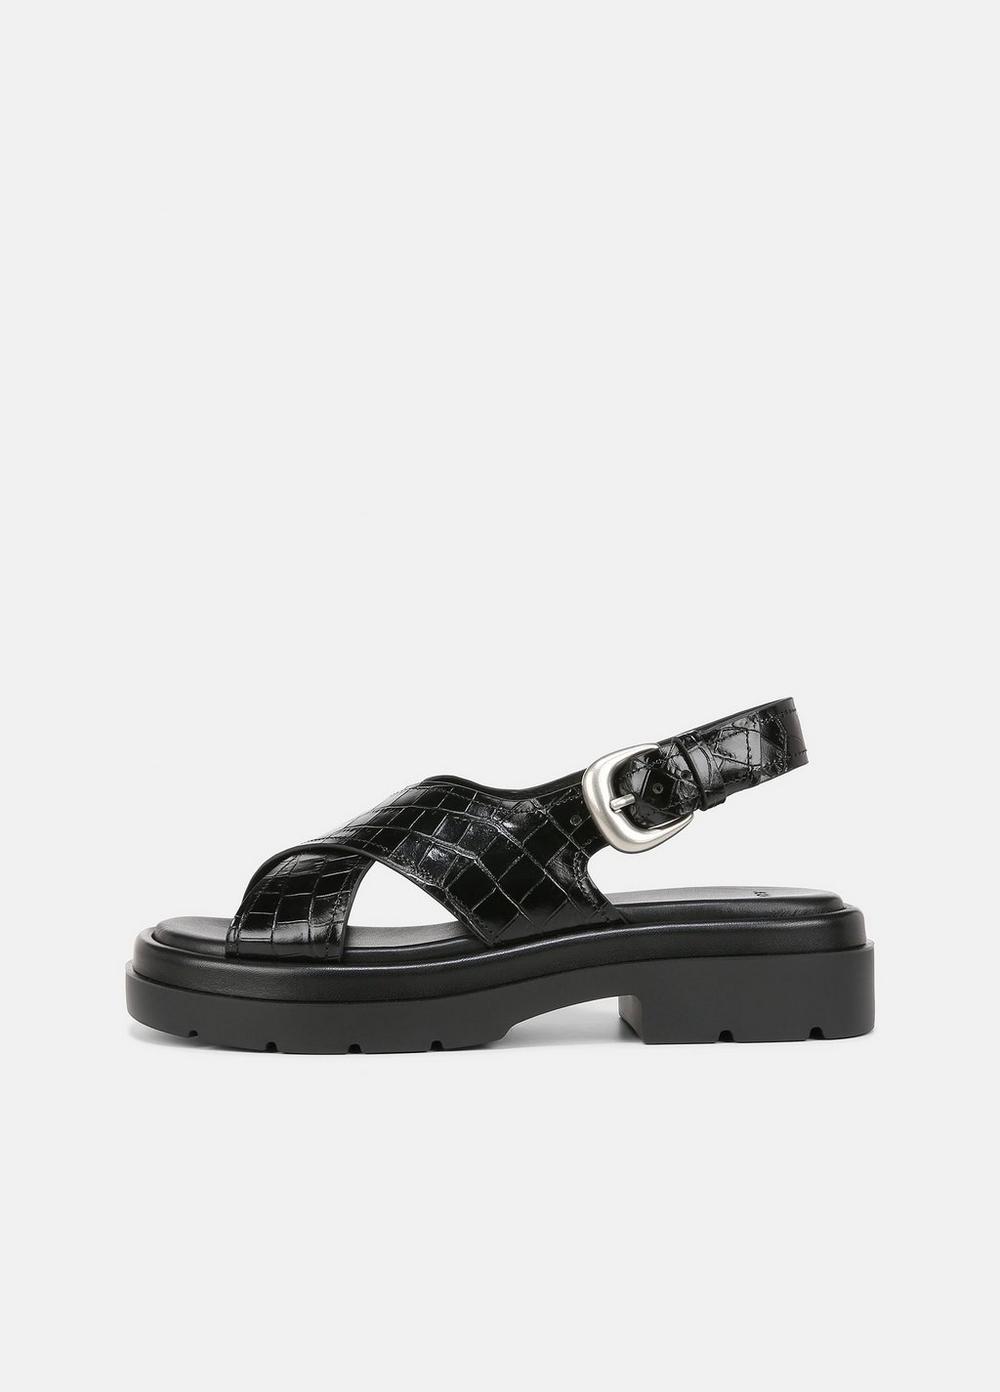 Helena Croc-Embossed Leather Lug-Sole Sandal, Black, Size 9.5 Vince